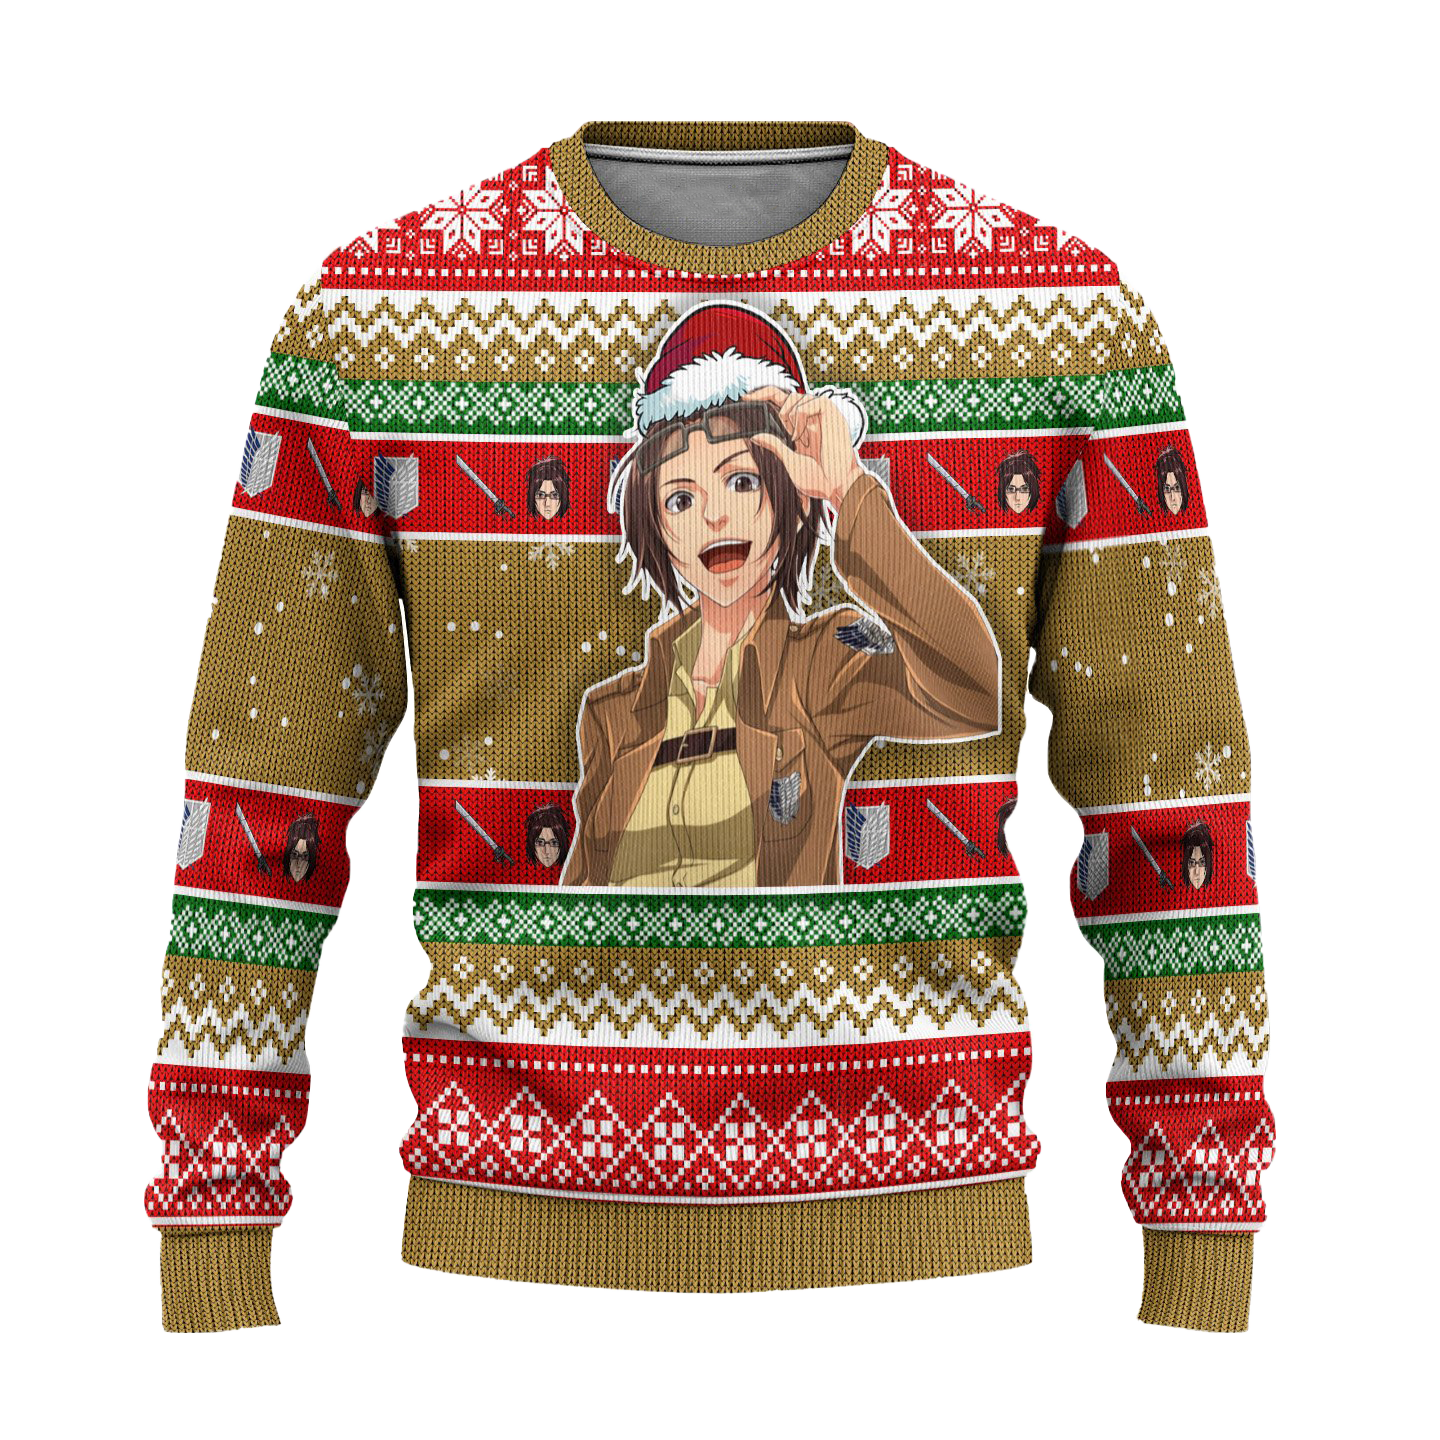 Hange Zoe Attack on Titan Anime Ugly Christmas Sweater Xmas Gift